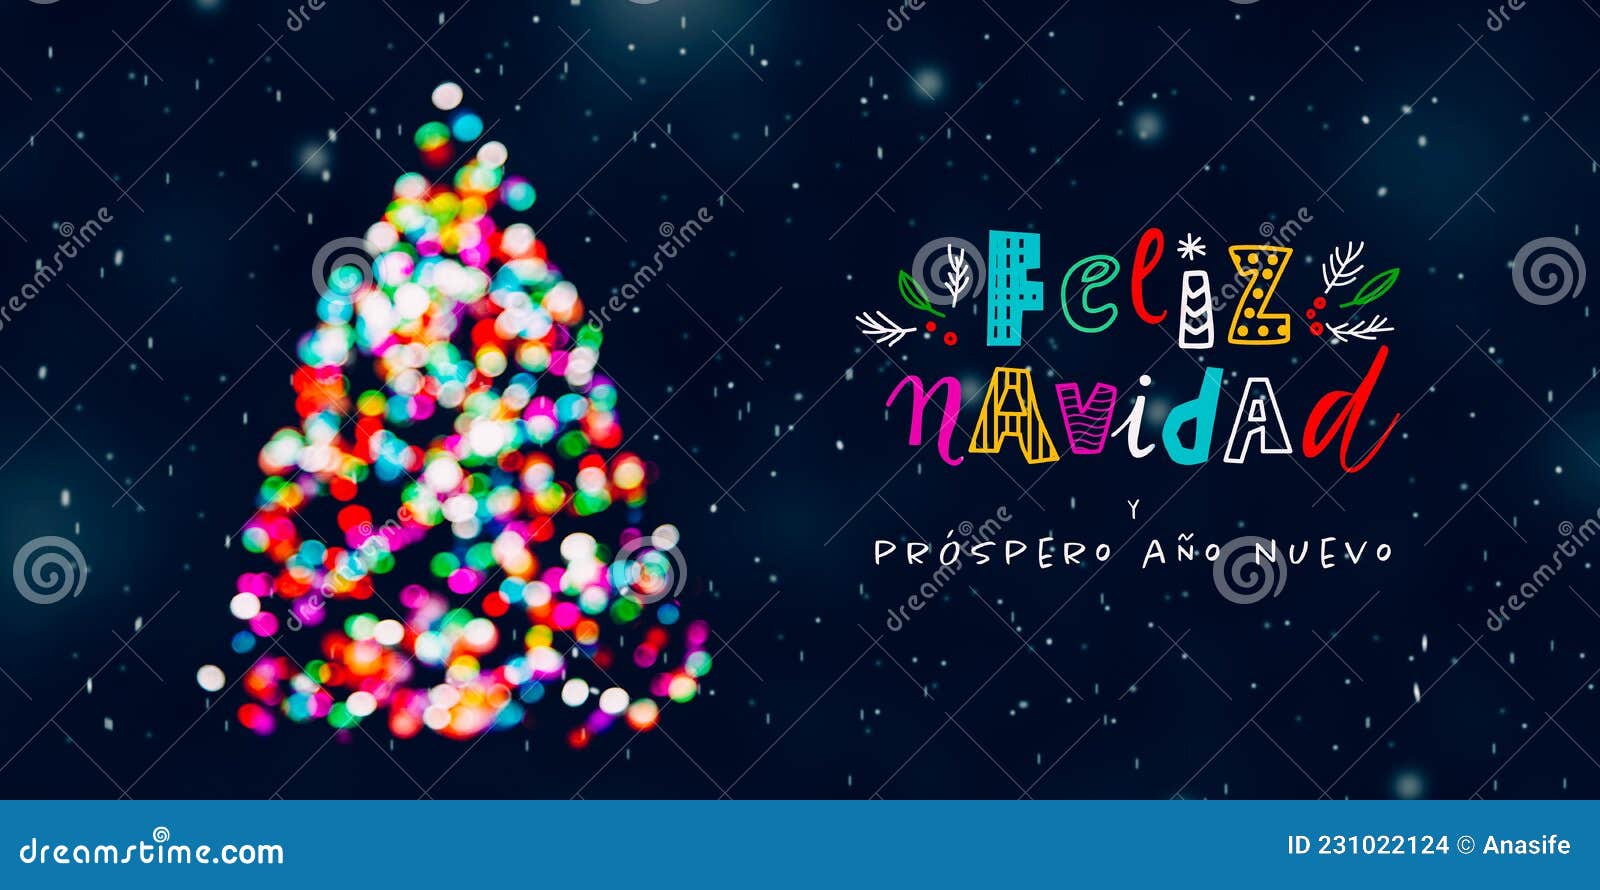 feliz navidad greeting card with an abstract tree full of colorful christmas lights